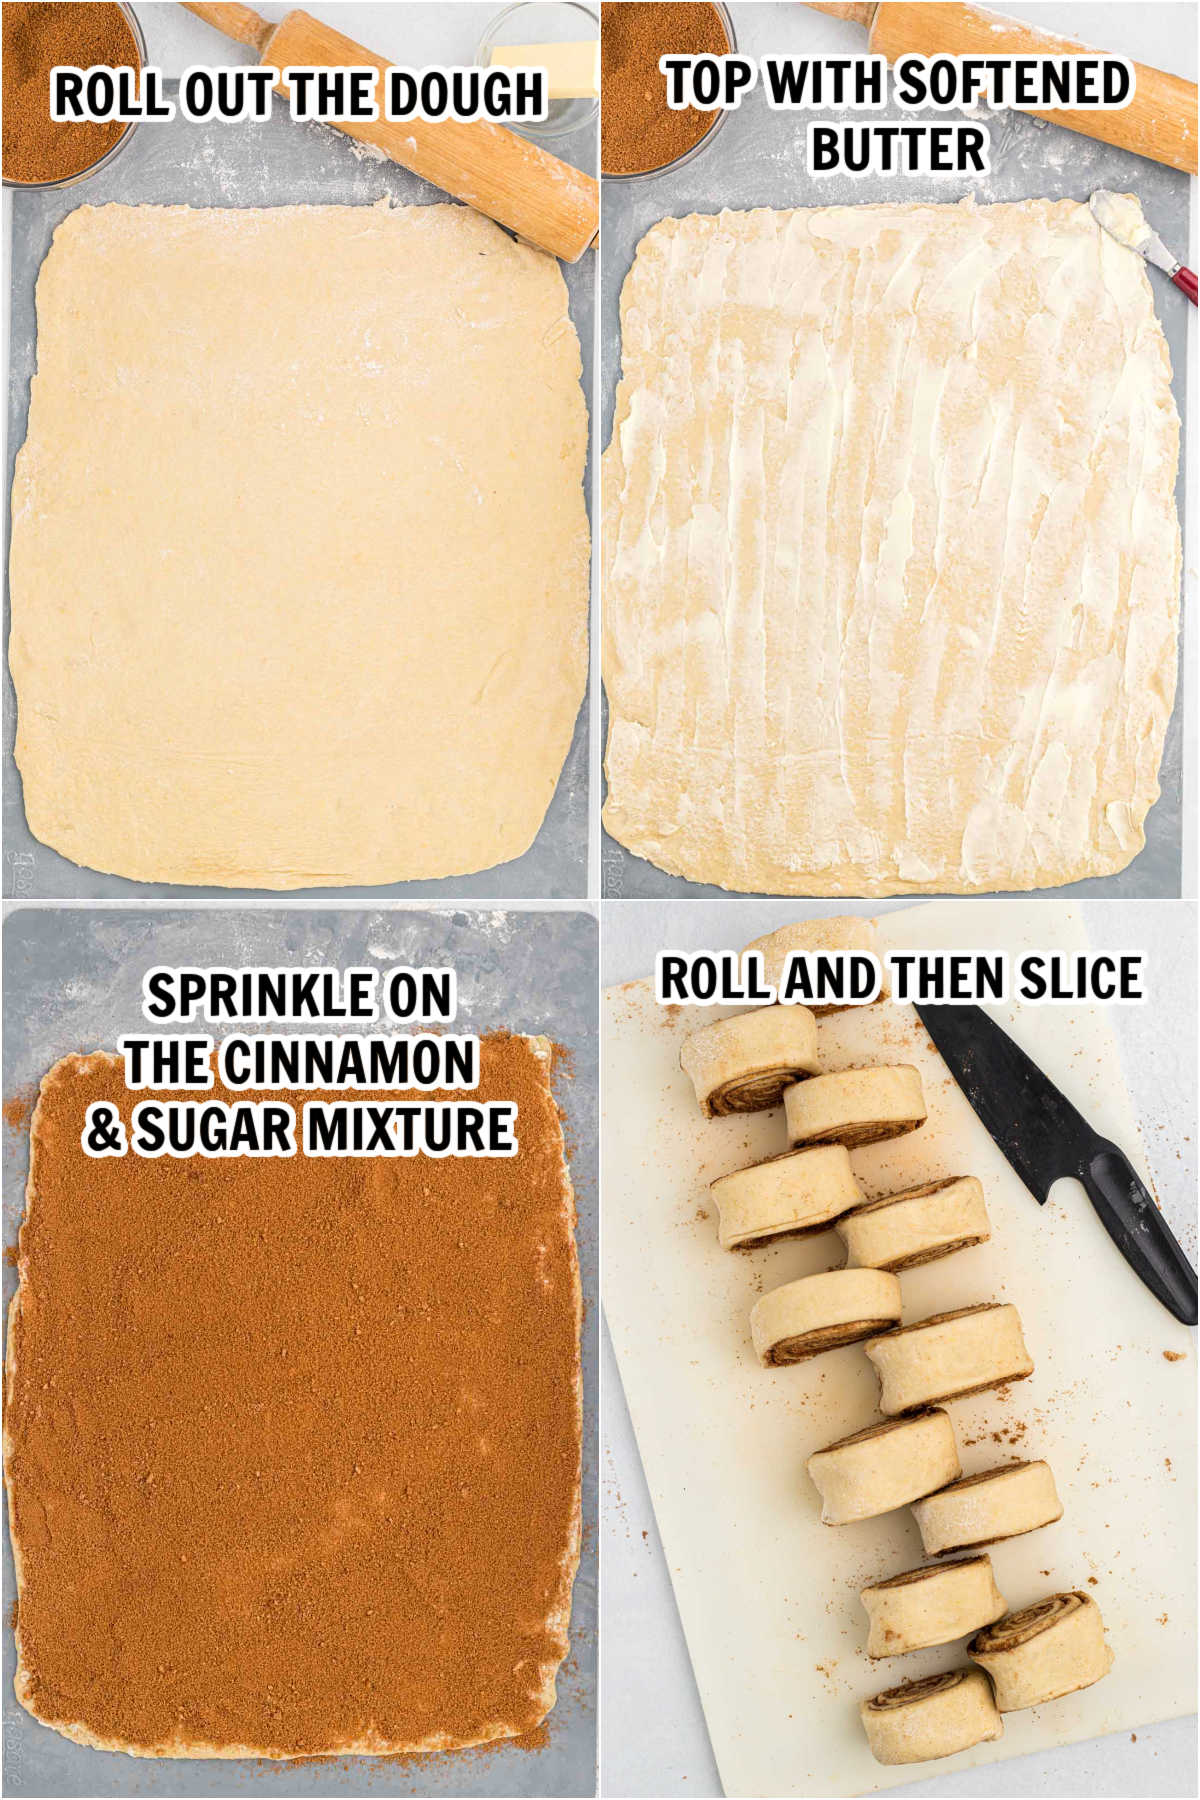 Preparing the cinnamon rolls